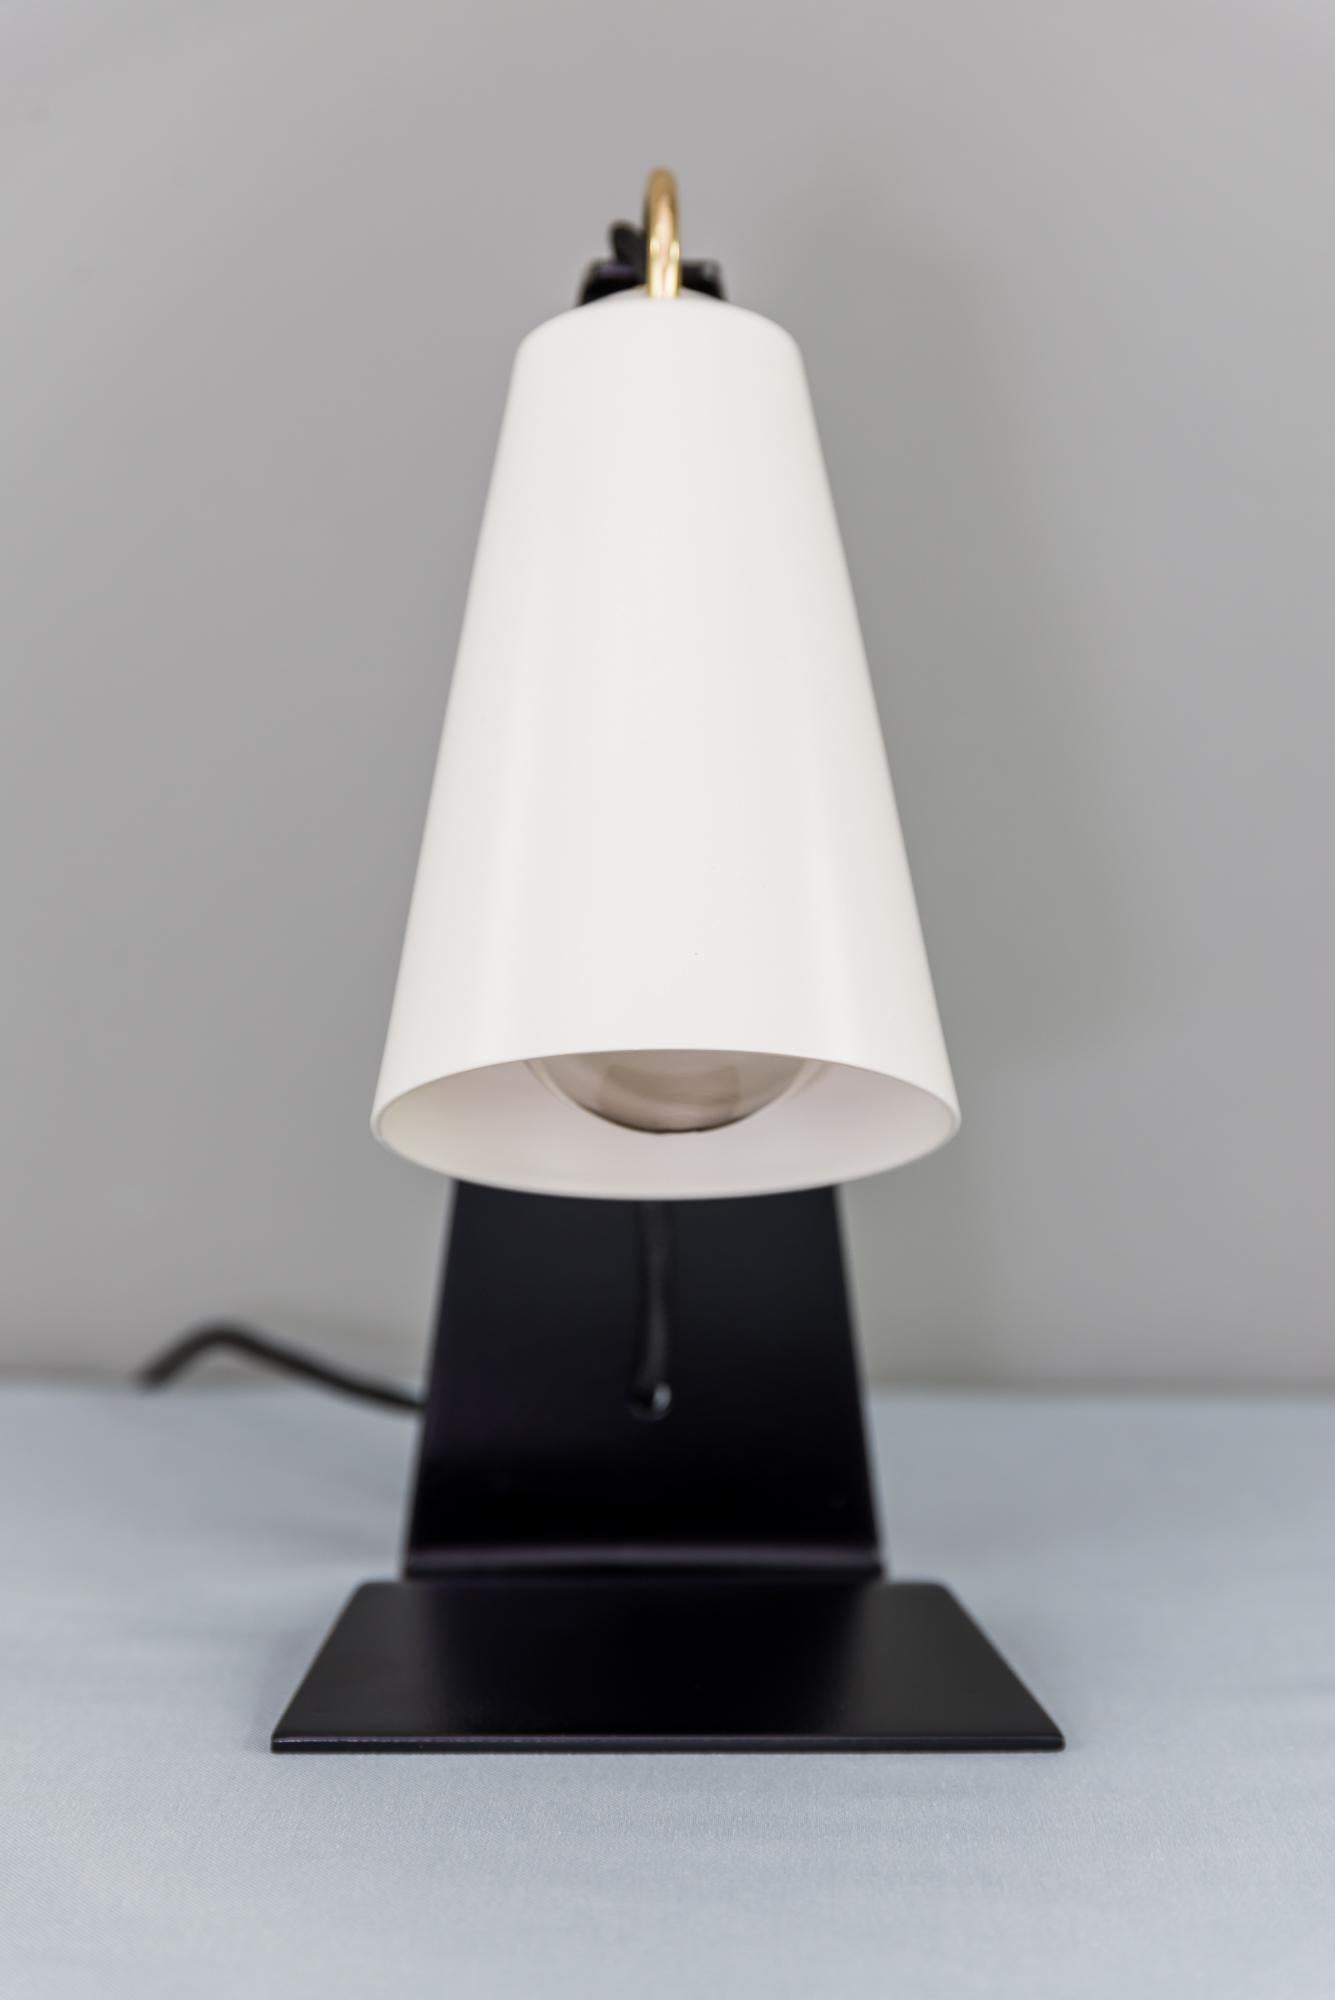 Black and white Austrian modernist metall table lamp hook by J. T. Kalmar, 1960s.